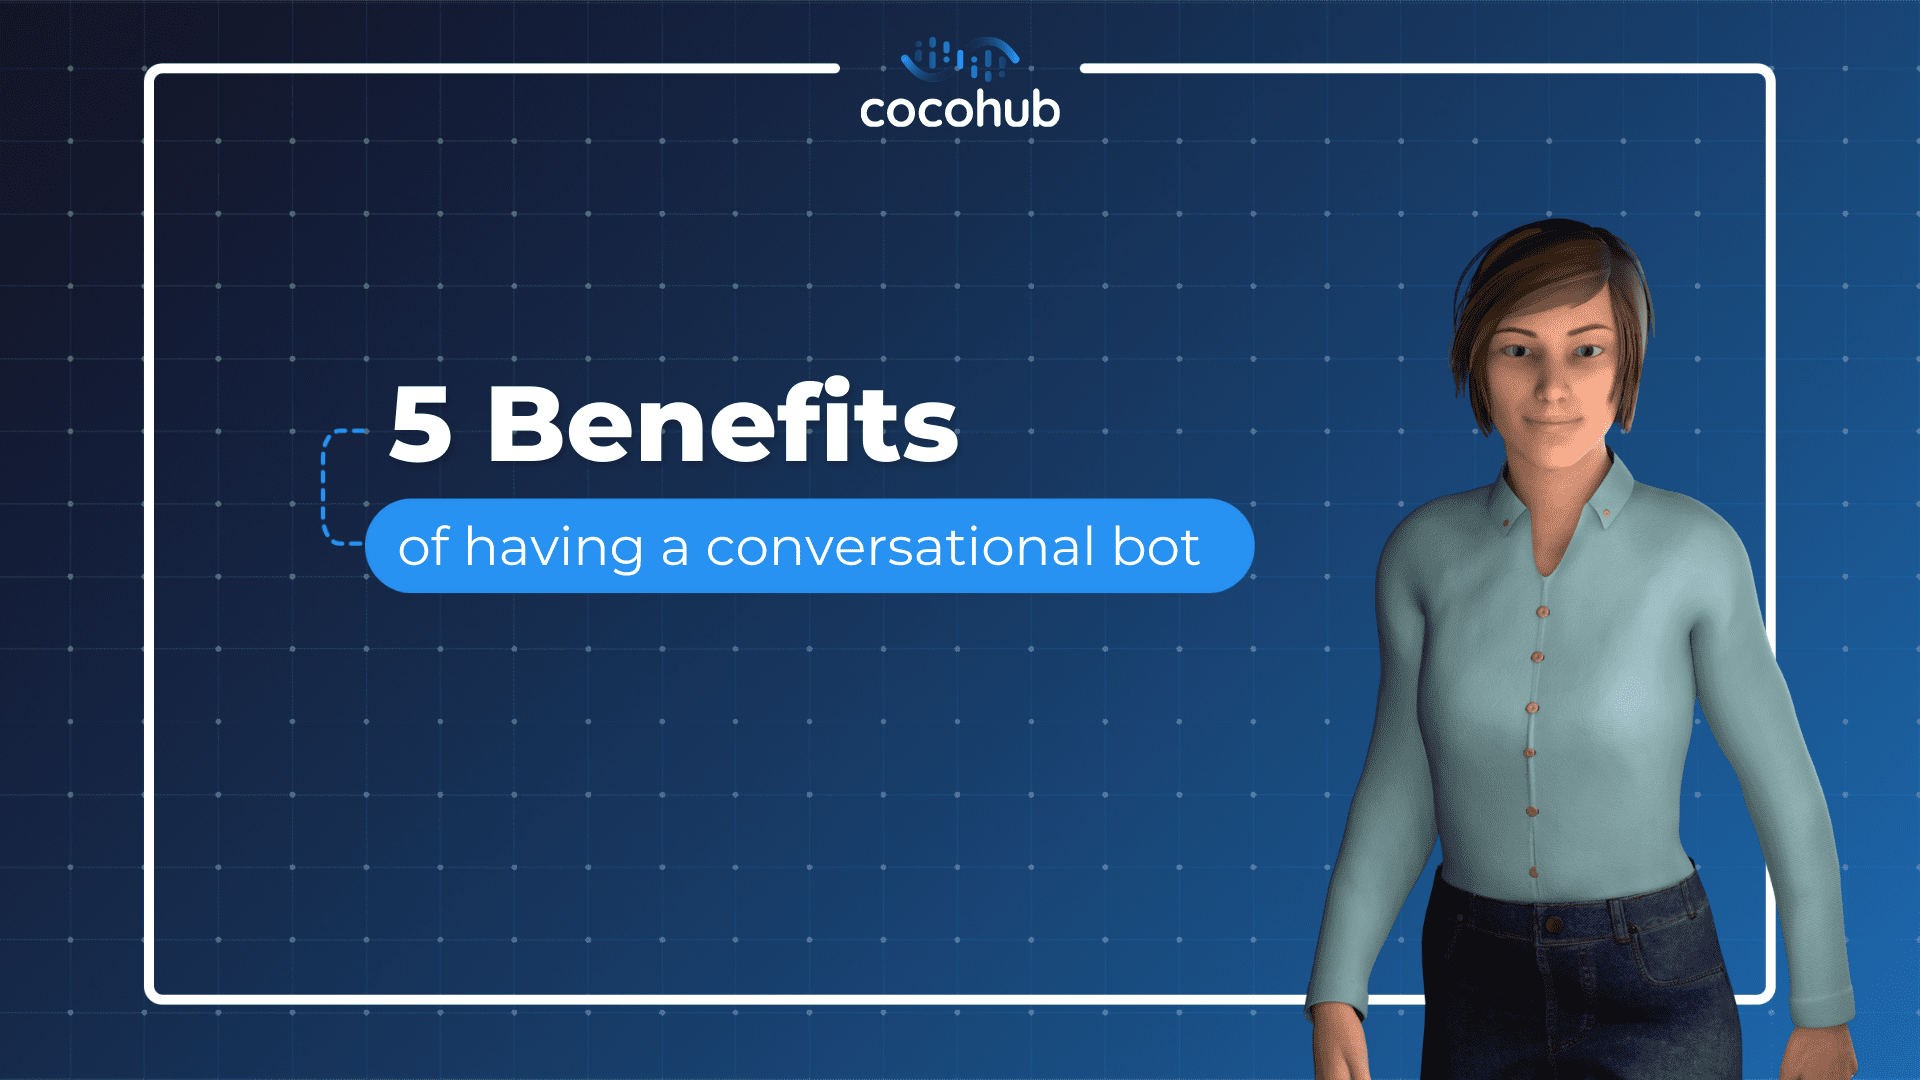 5 Benefits of having a conversational bot